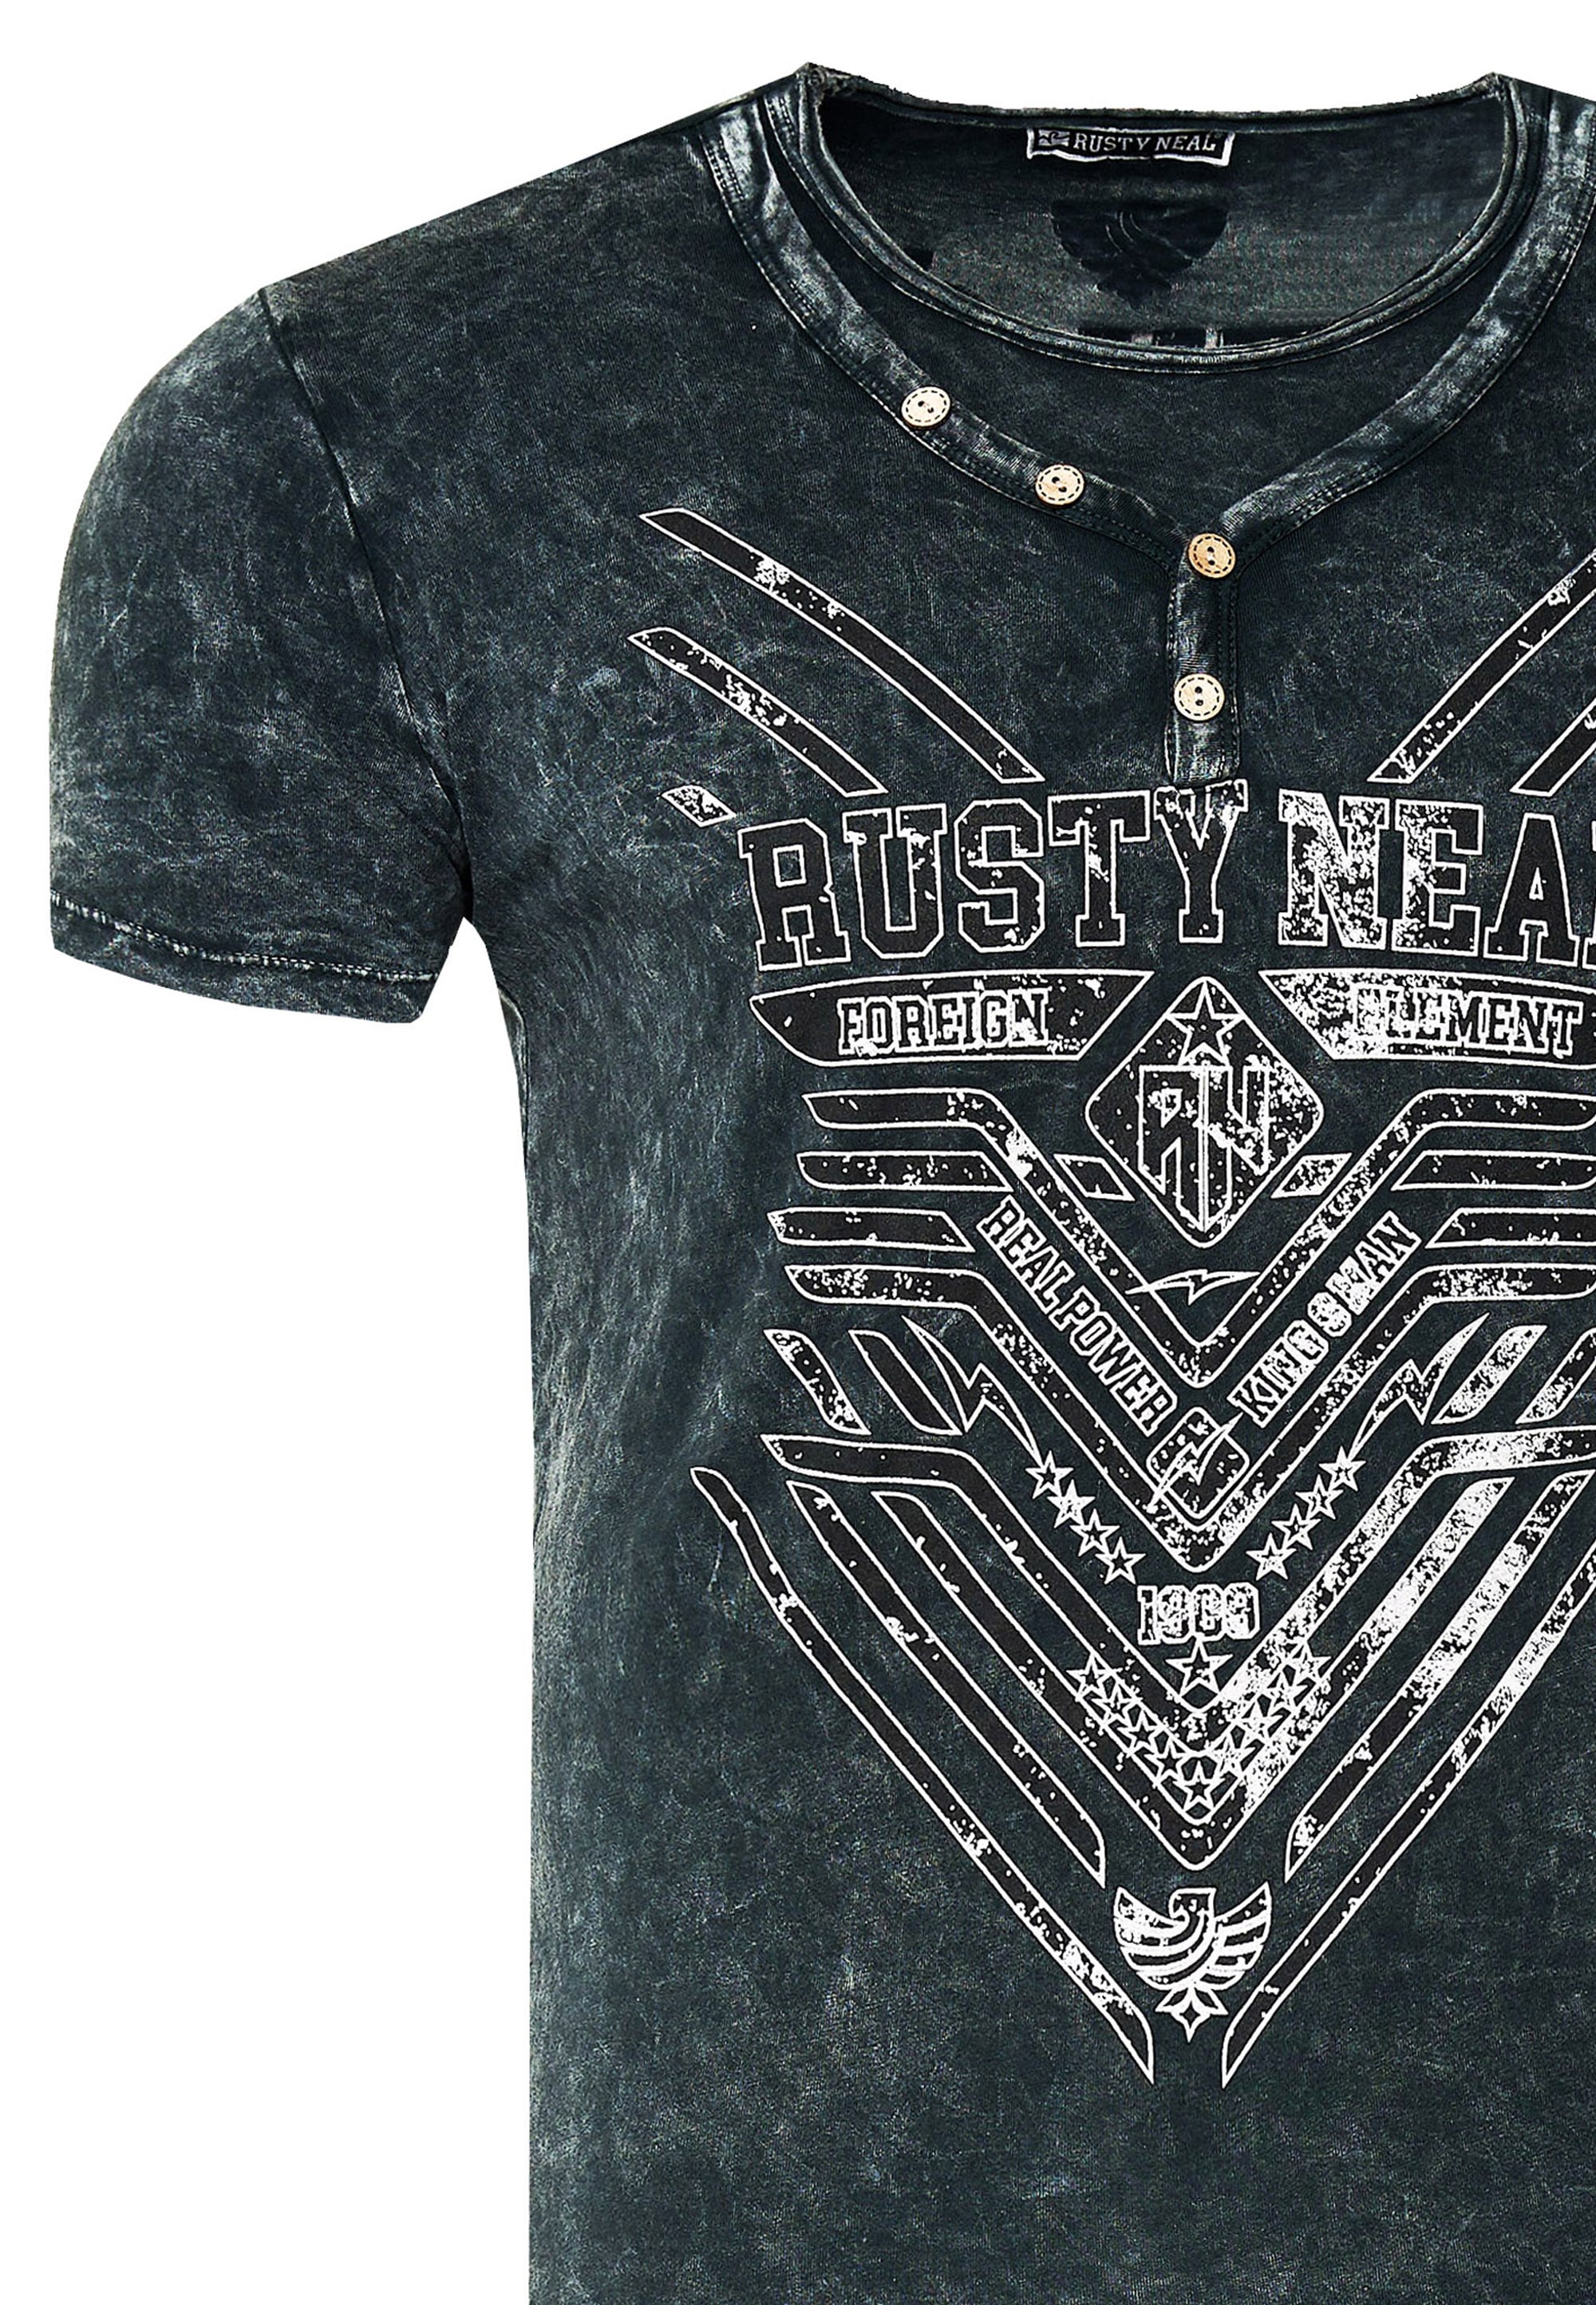 Black Friday BAUR Neal Print Rusty stylischem mit T-Shirt, 